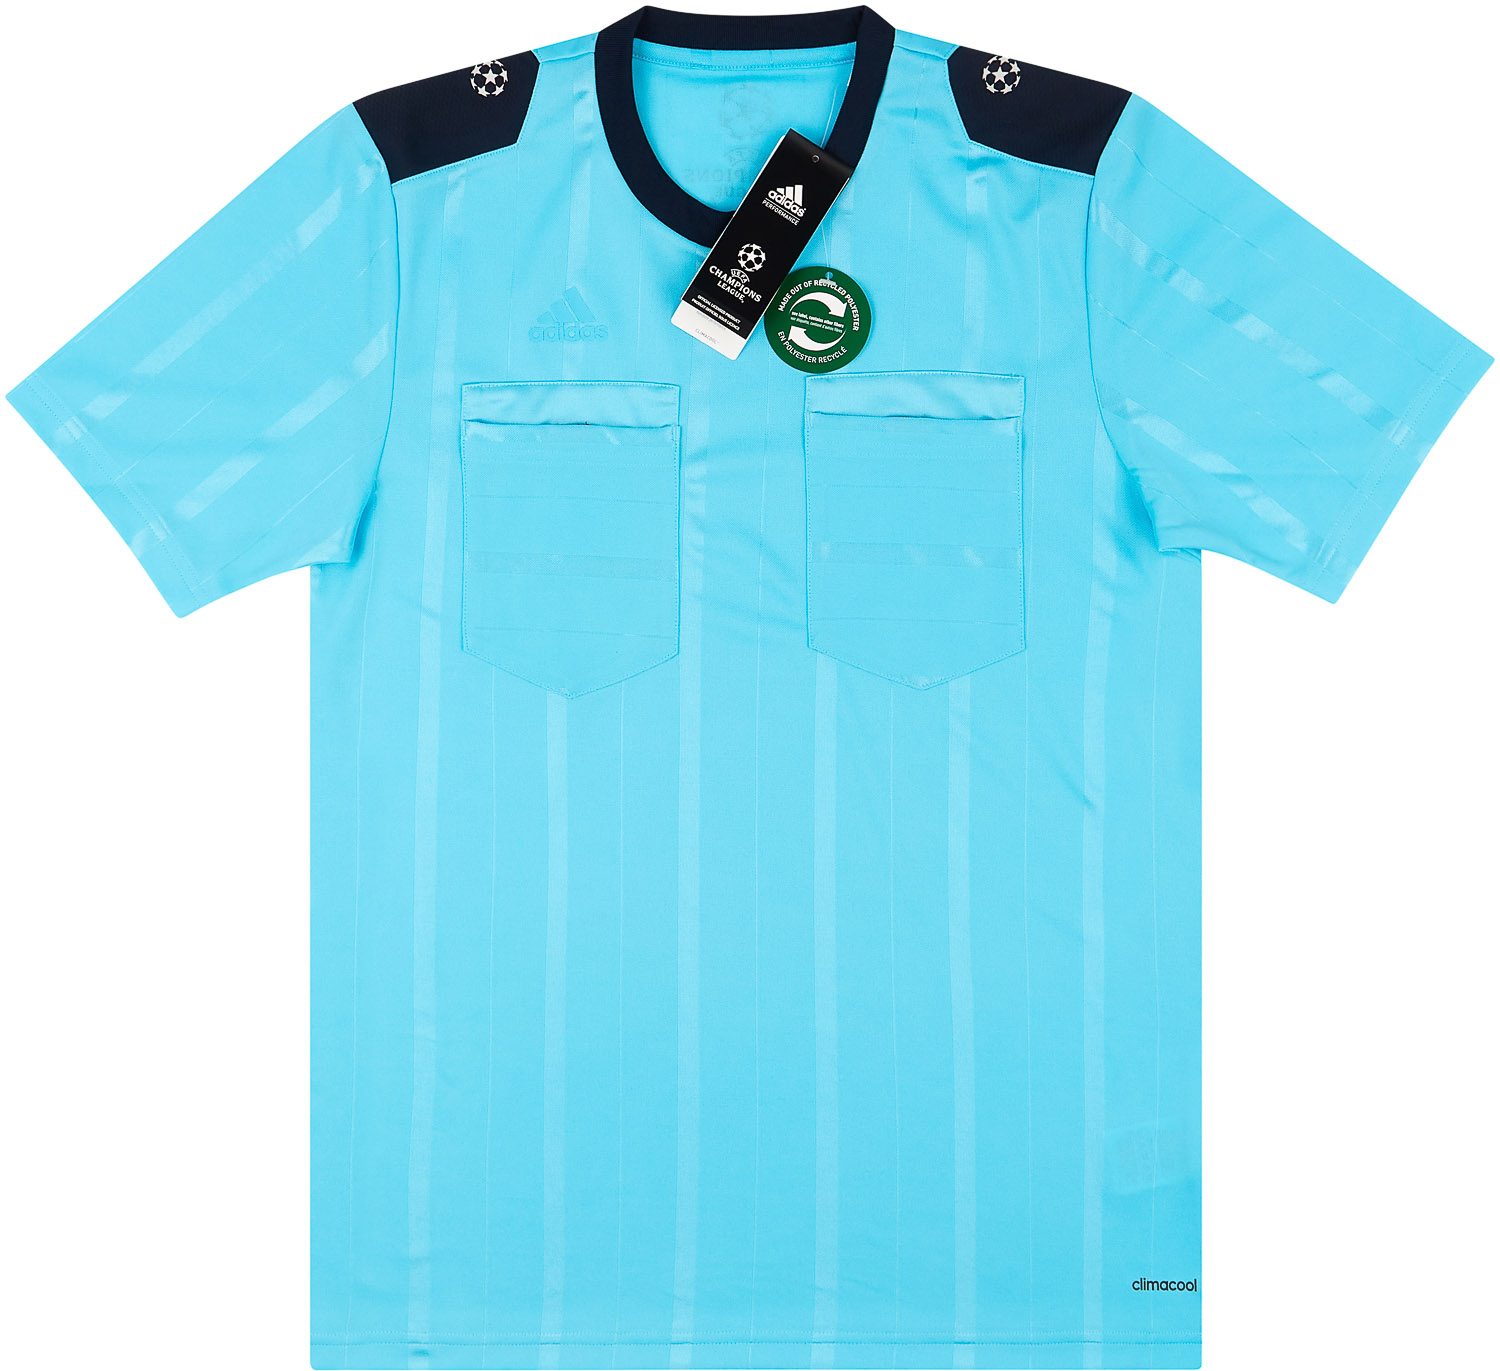 2016-18 UEFA Champions League Referee Shirt - NEW - (S)